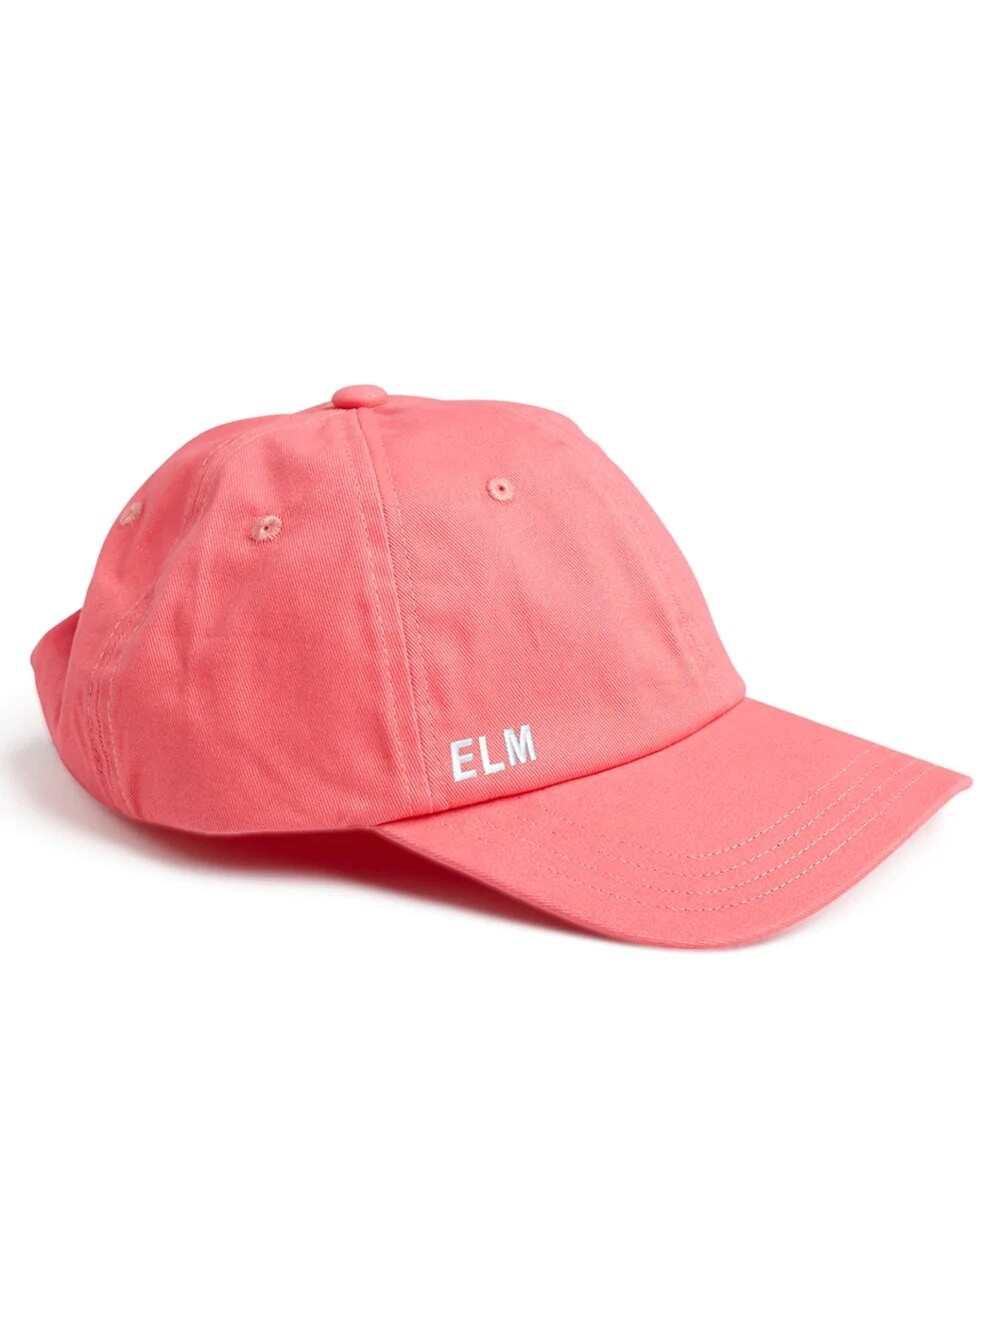 Elm - Cap - Watermelon